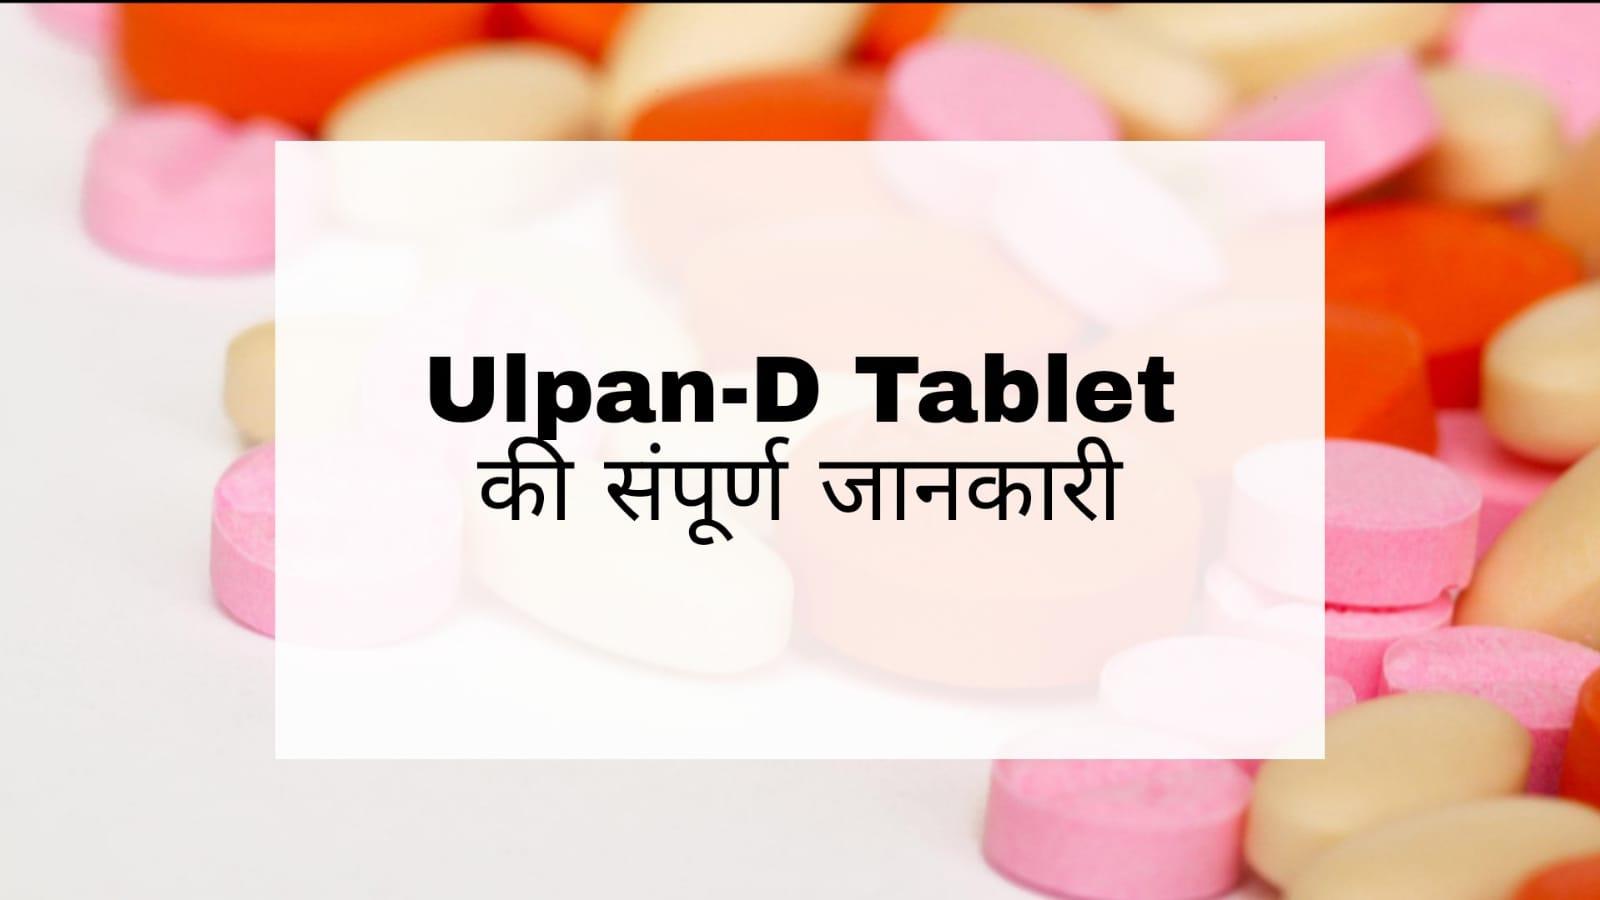 Ulpan-D Tablet Hindi